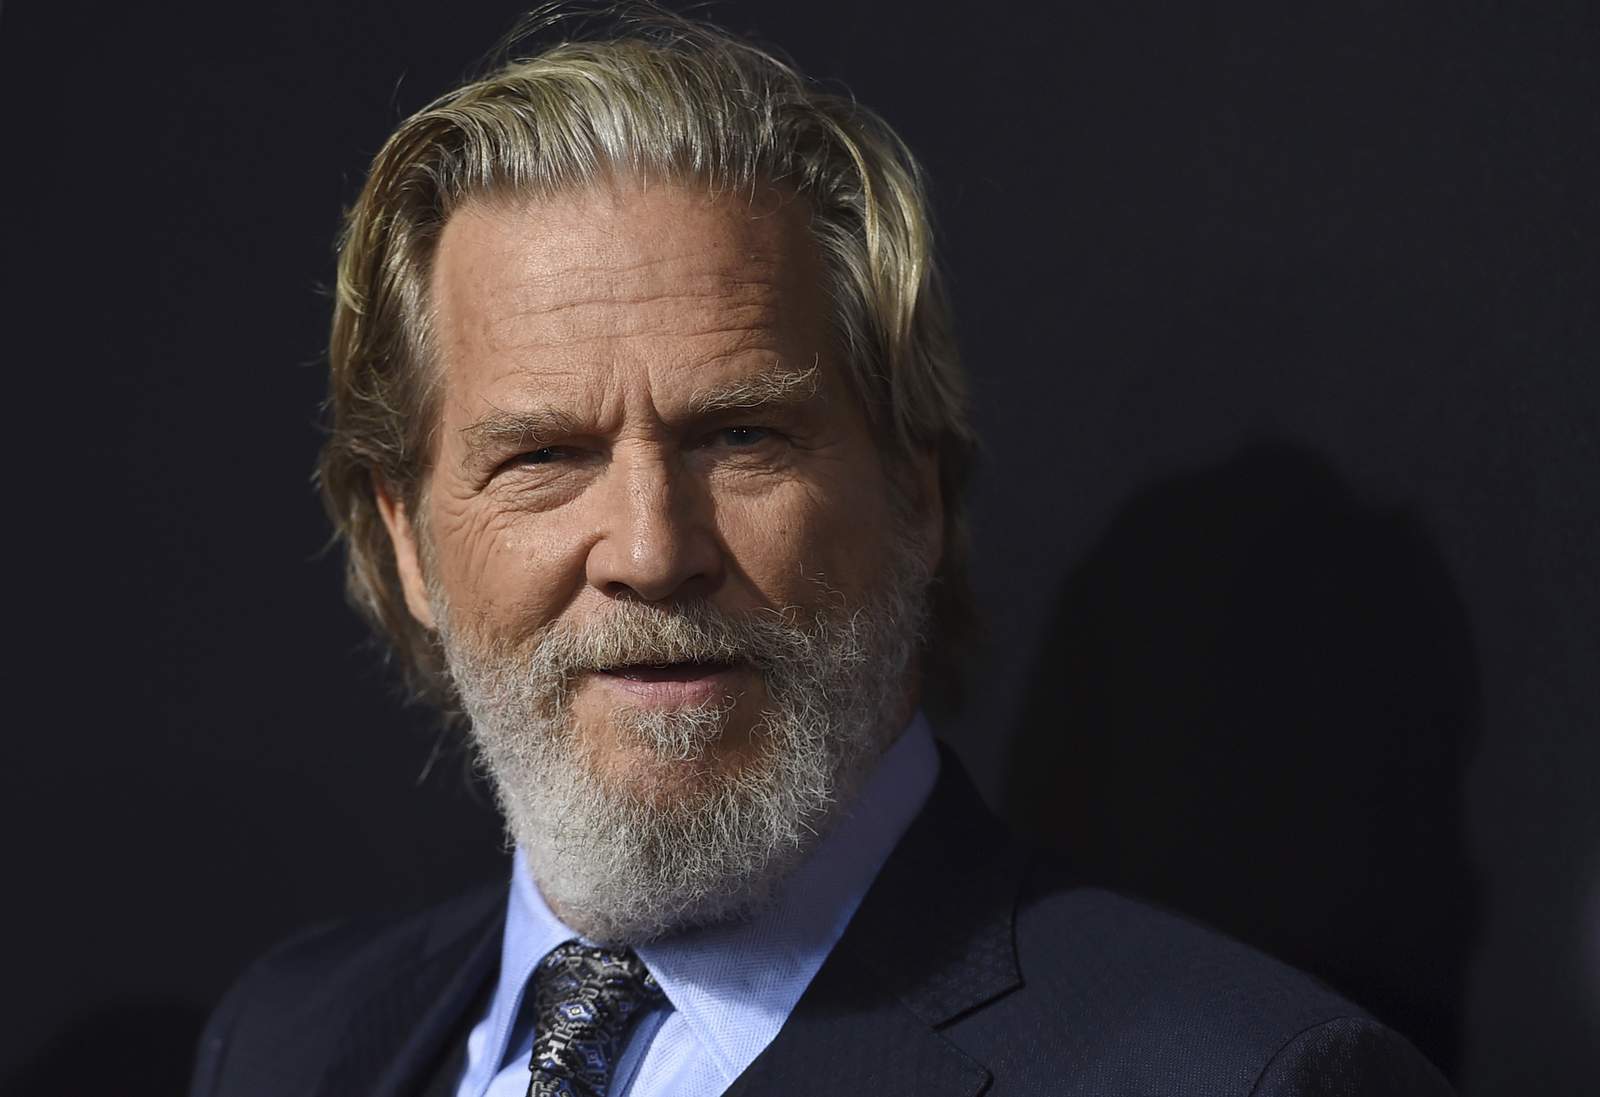 Jeff Bridges says he has lymphoma, cites good prognosis